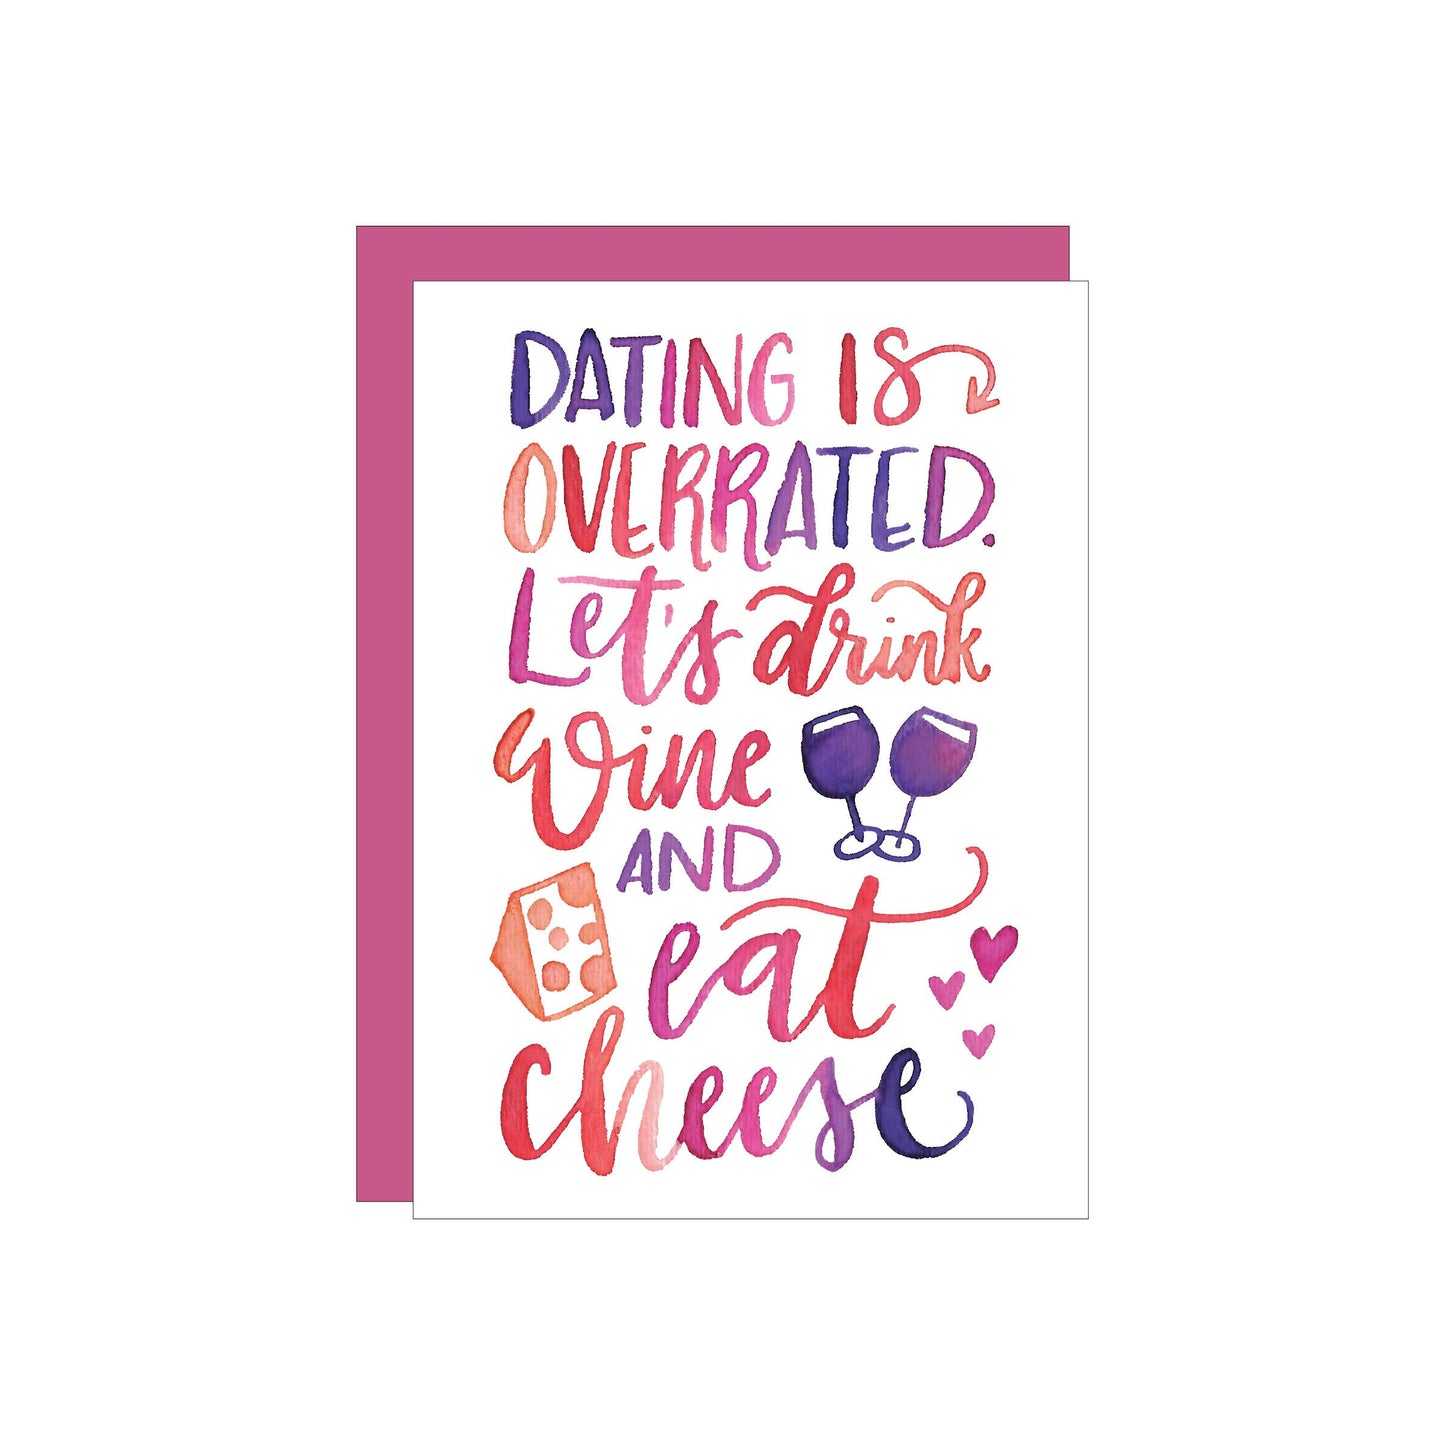 Wine + Cheese greeting card